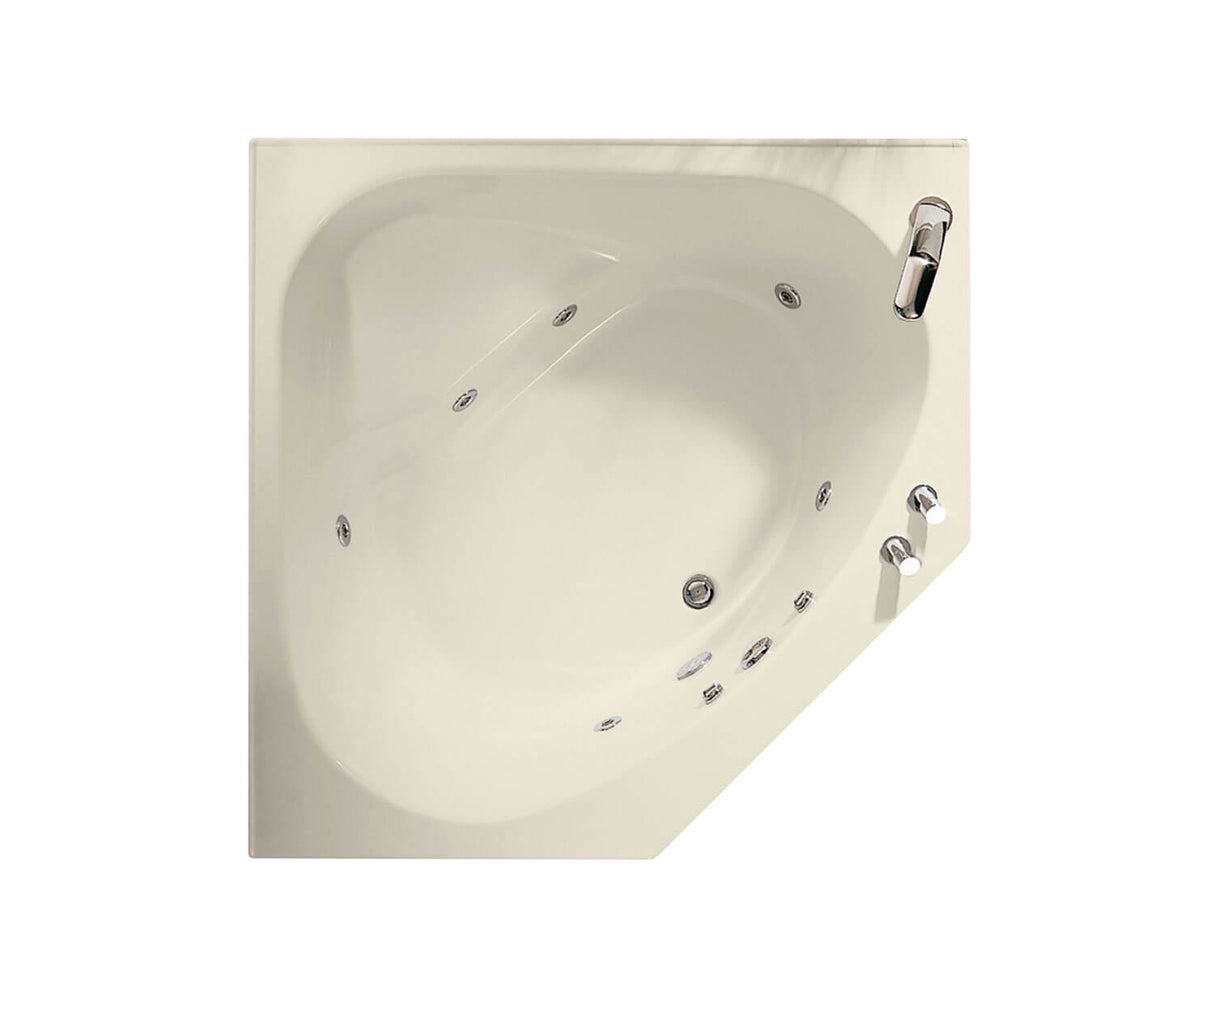 MAAX 100054-003-004-000 Tandem II 6060 Acrylic Corner Center Drain Whirlpool Bathtub in Bone